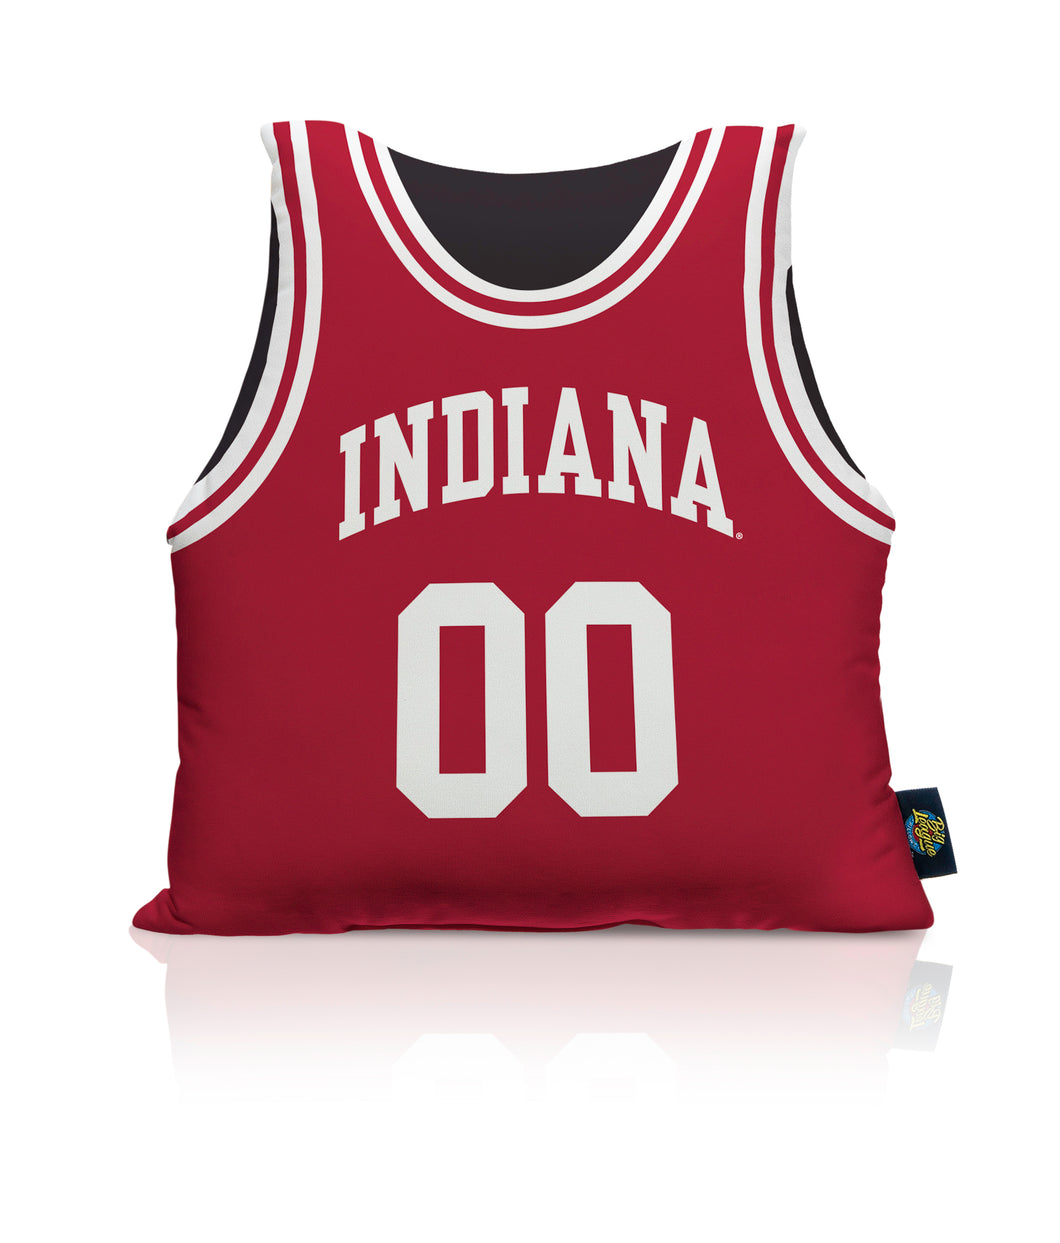 Indiana Hoosiers Plushlete Big League Jersey Pillow